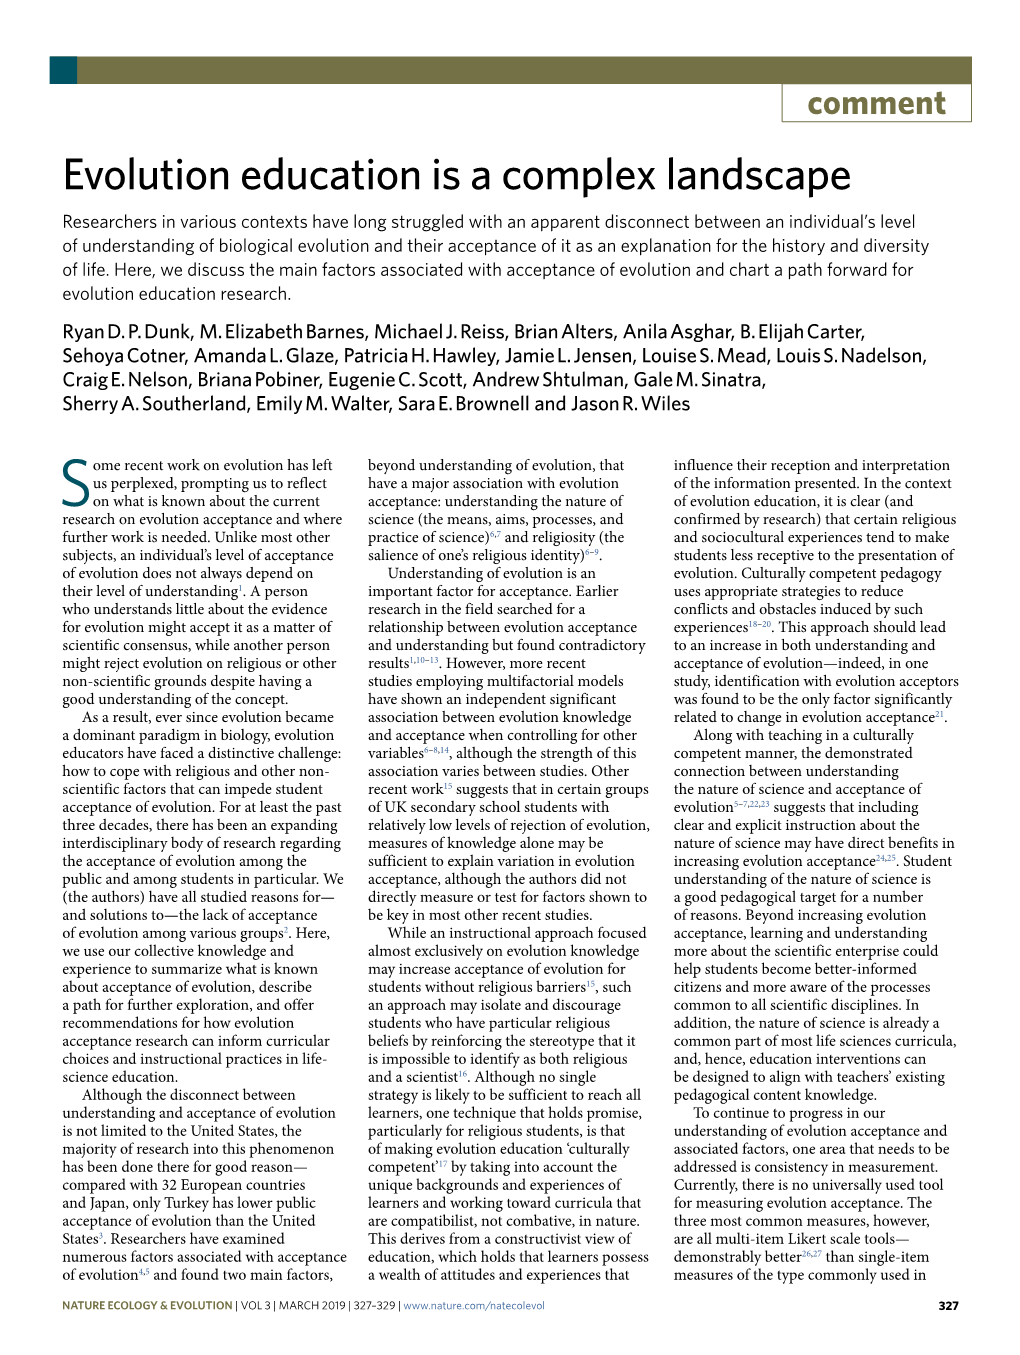 Evolution Education Is a Complex Landscape